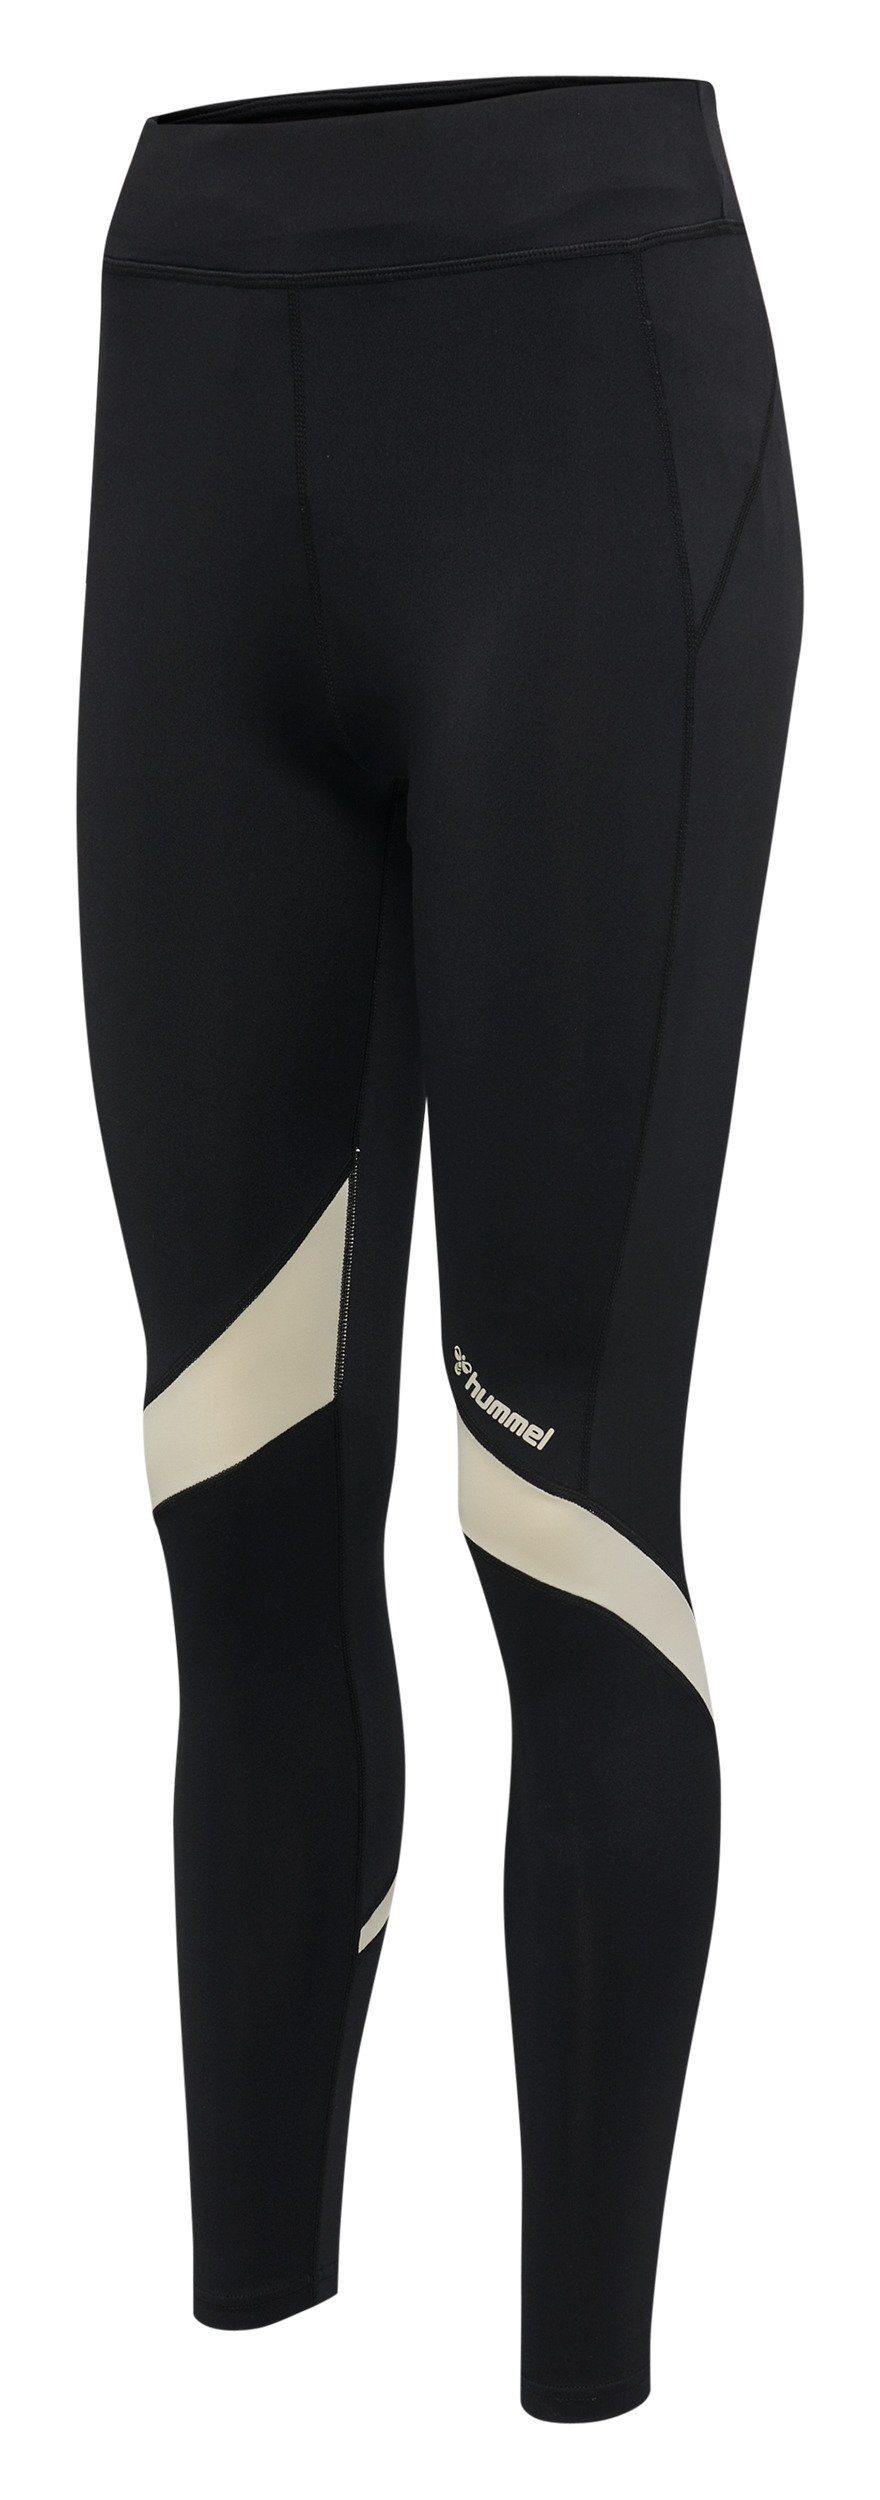 hummel Sporthose Hummel ALTHEA Waist Tights Damen Leggings Sportlegging Sporthose online kaufen | OTTO